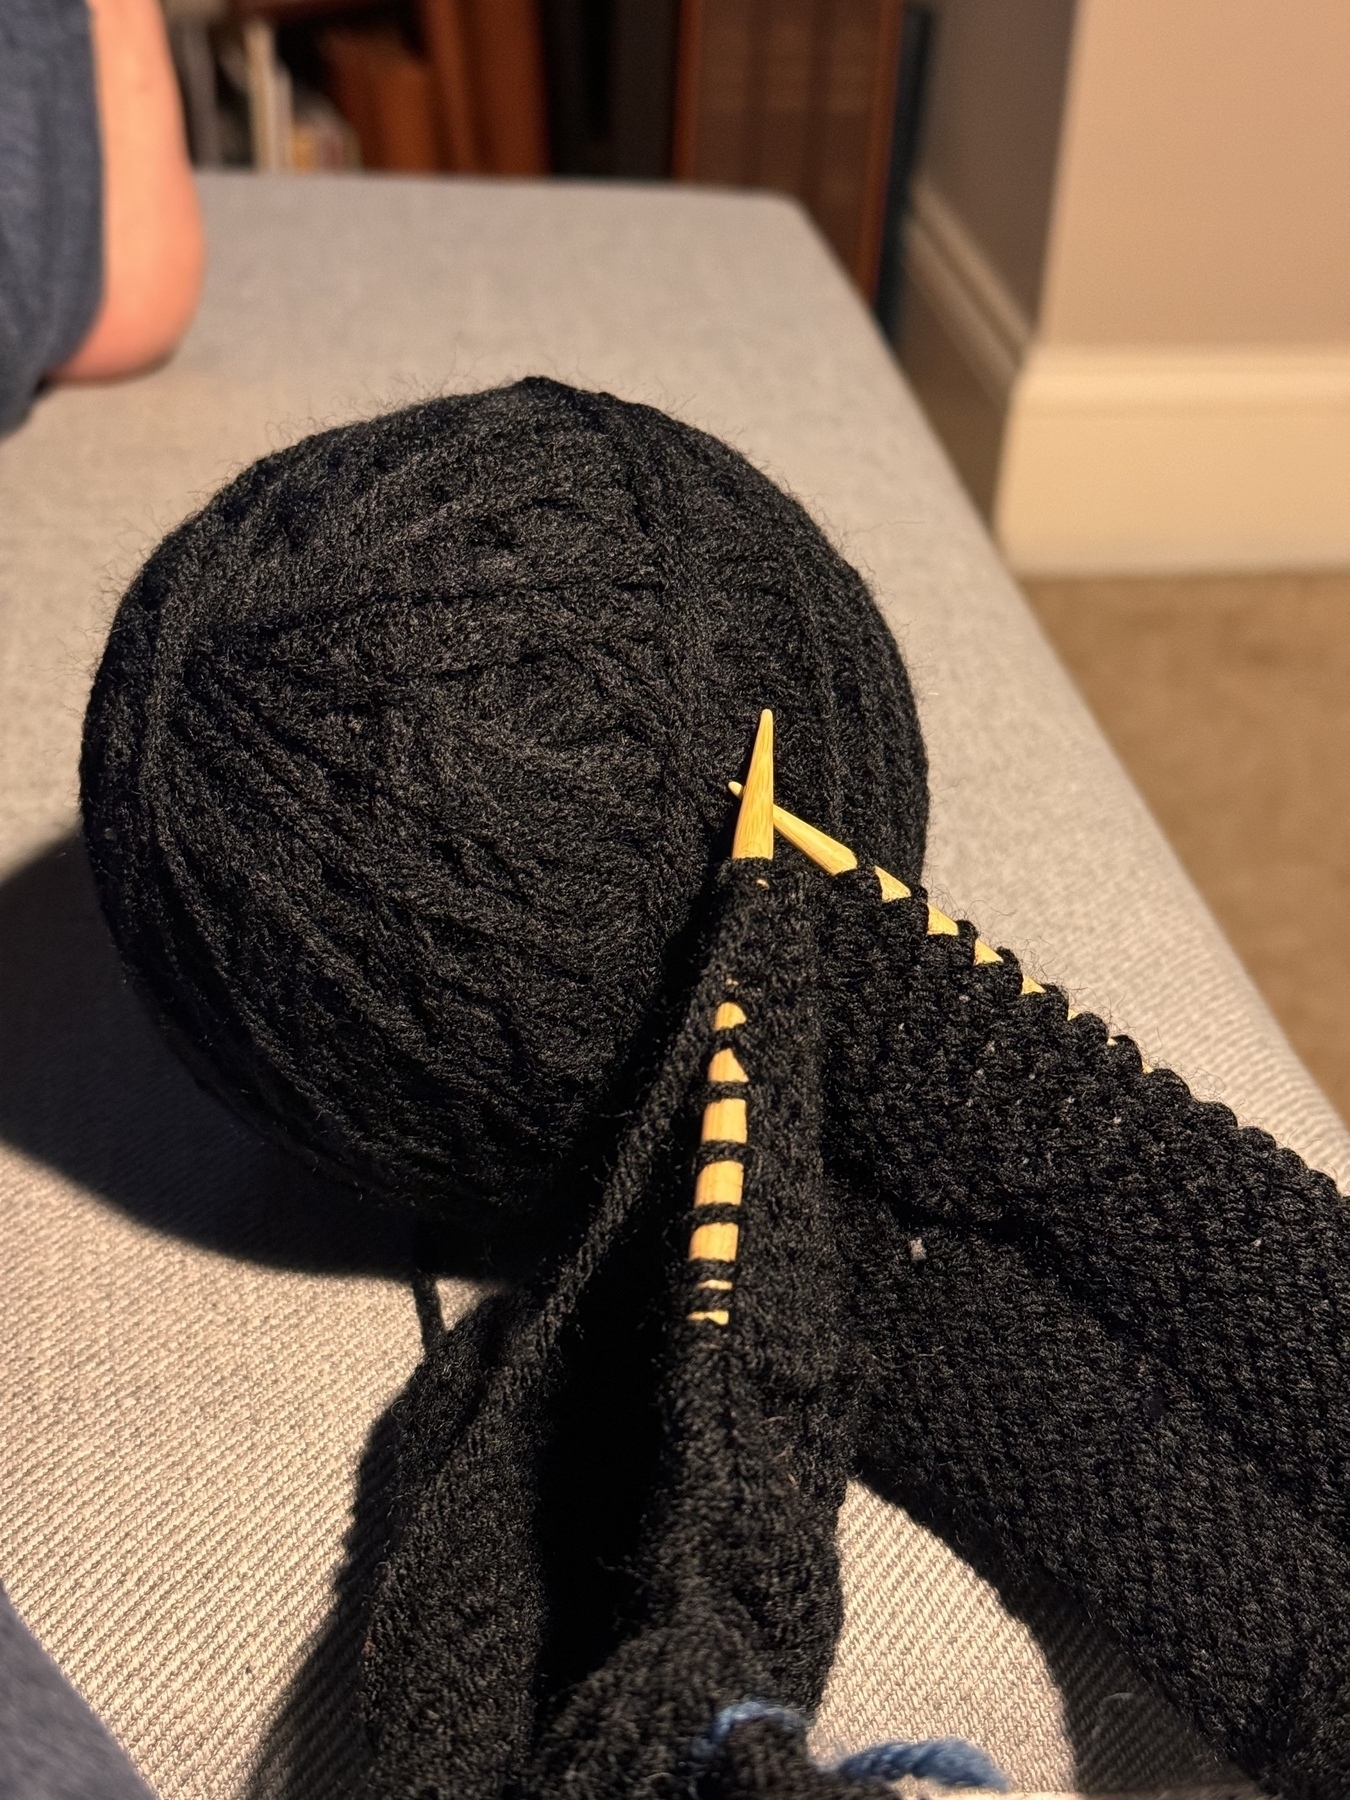 Circular knitting needles with black yarn. 